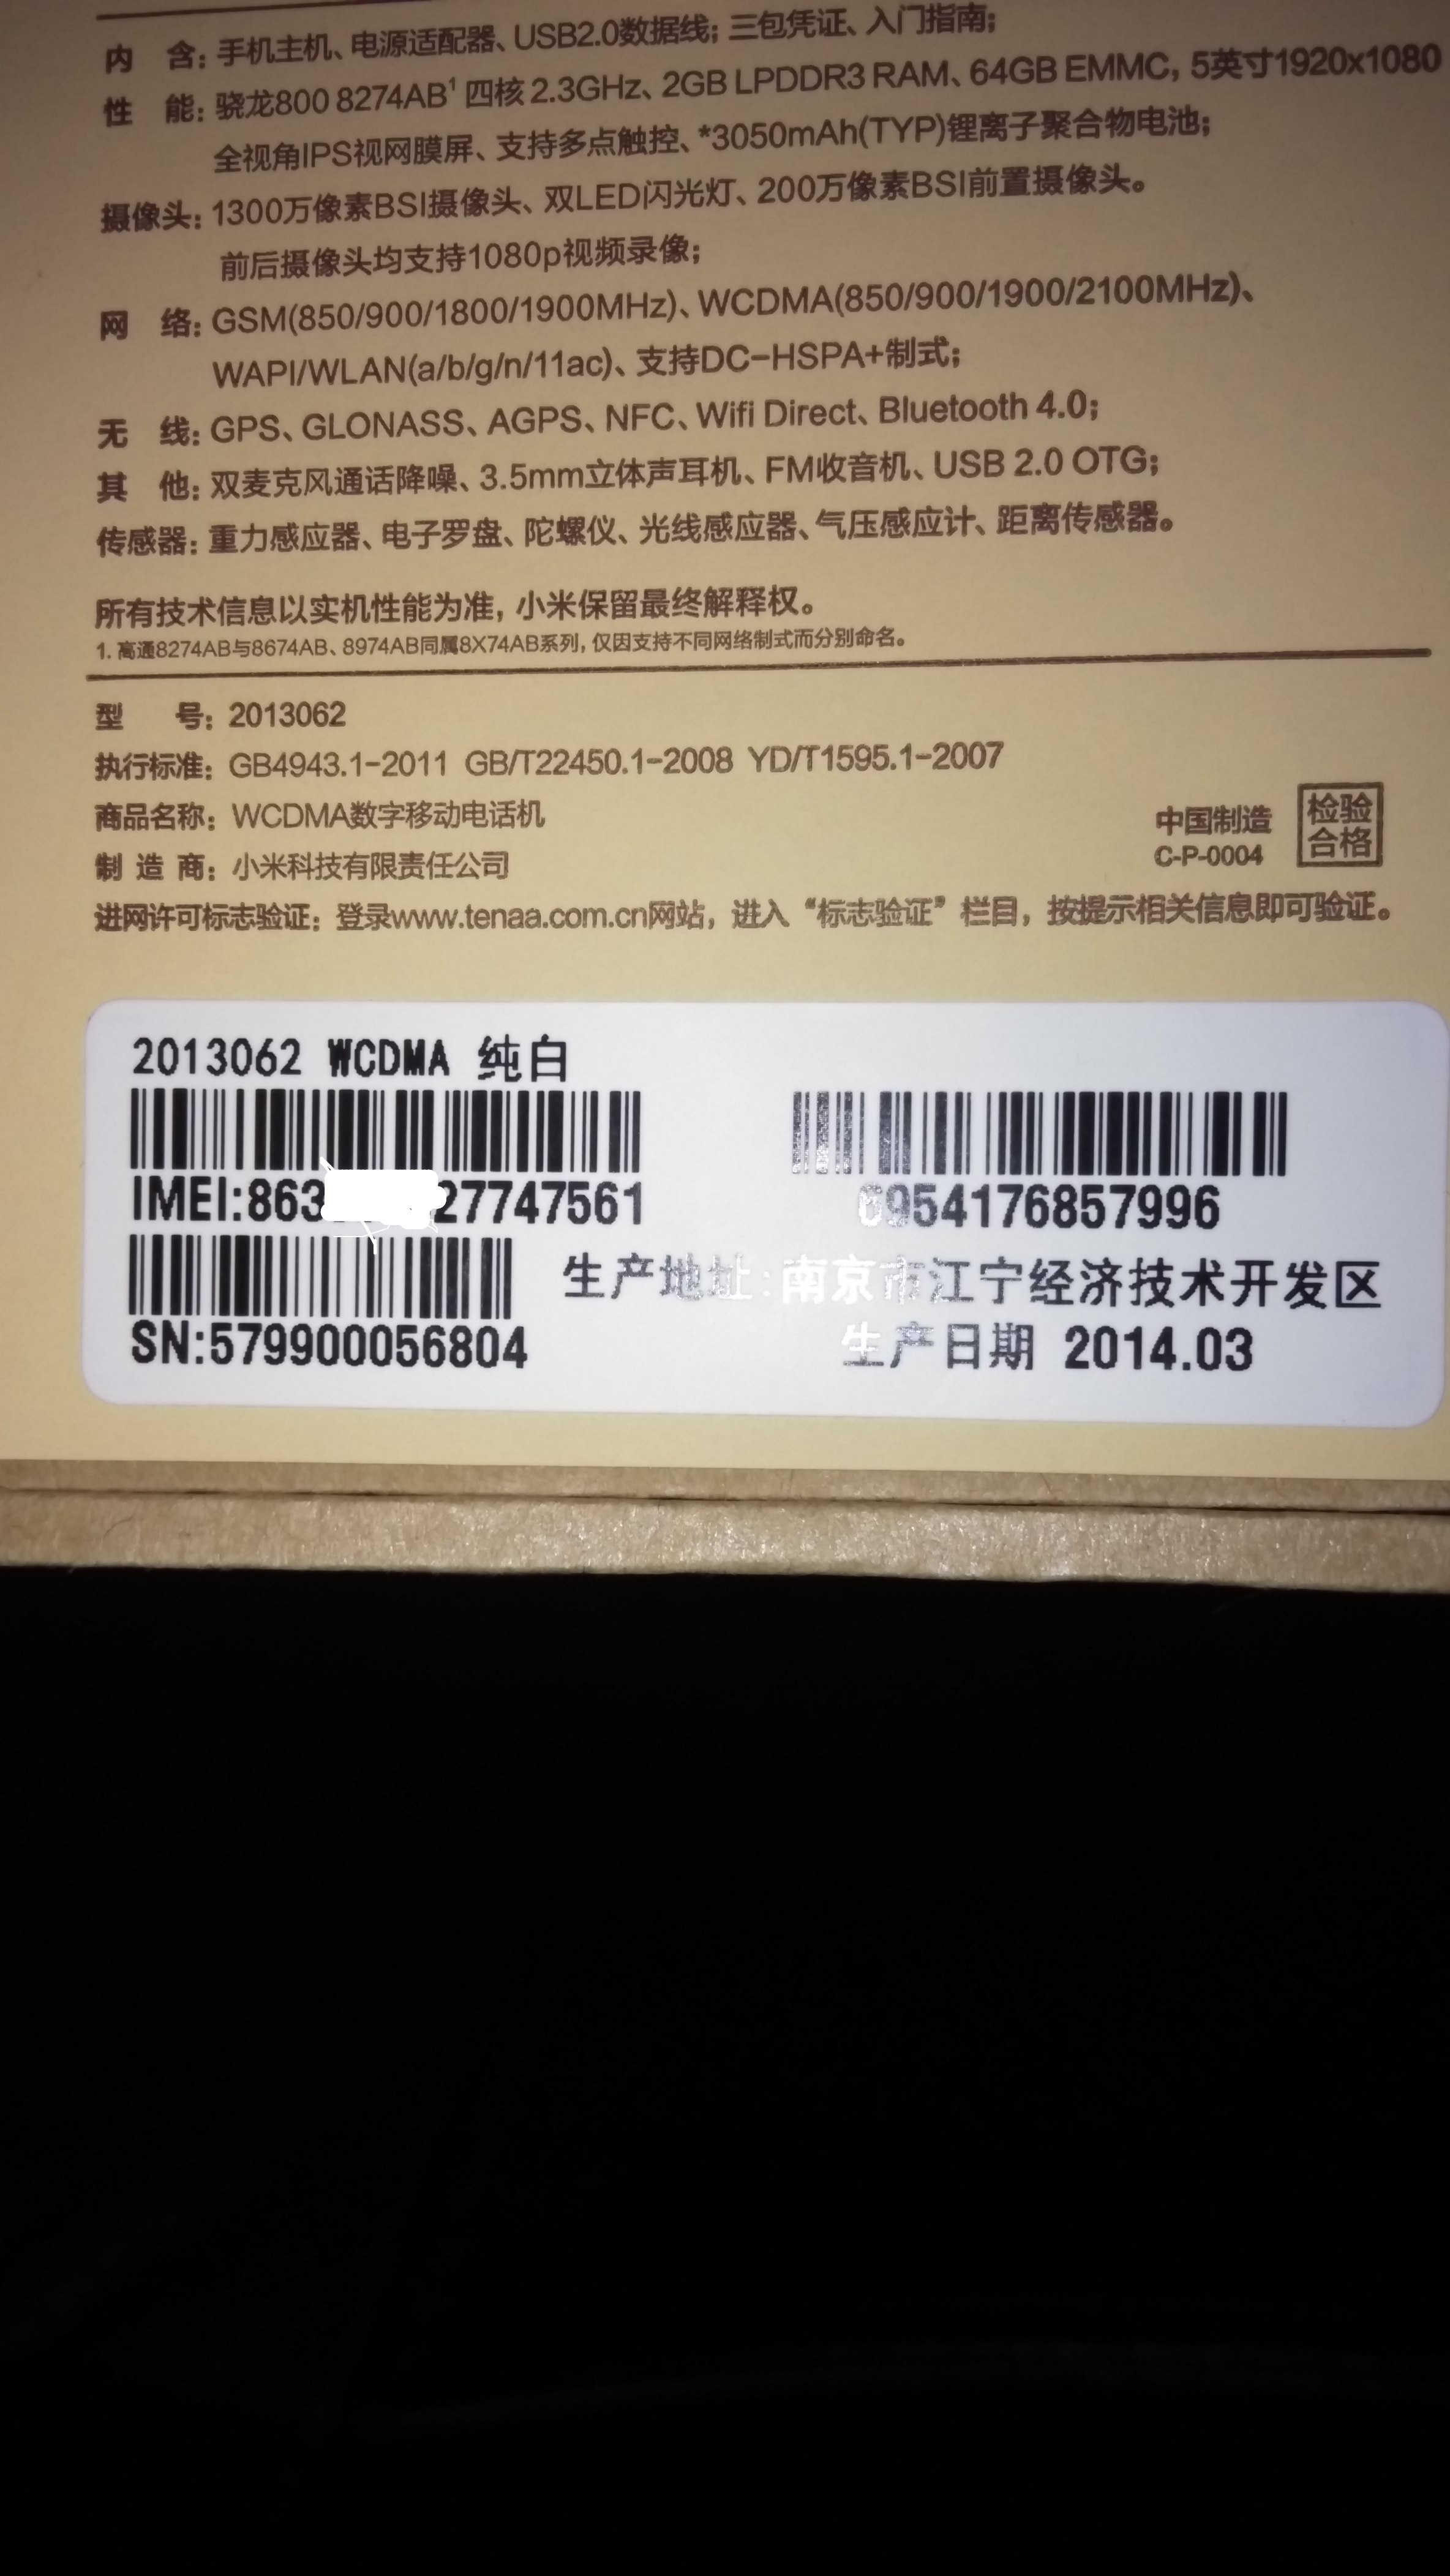 Xiaomi IMEI number 